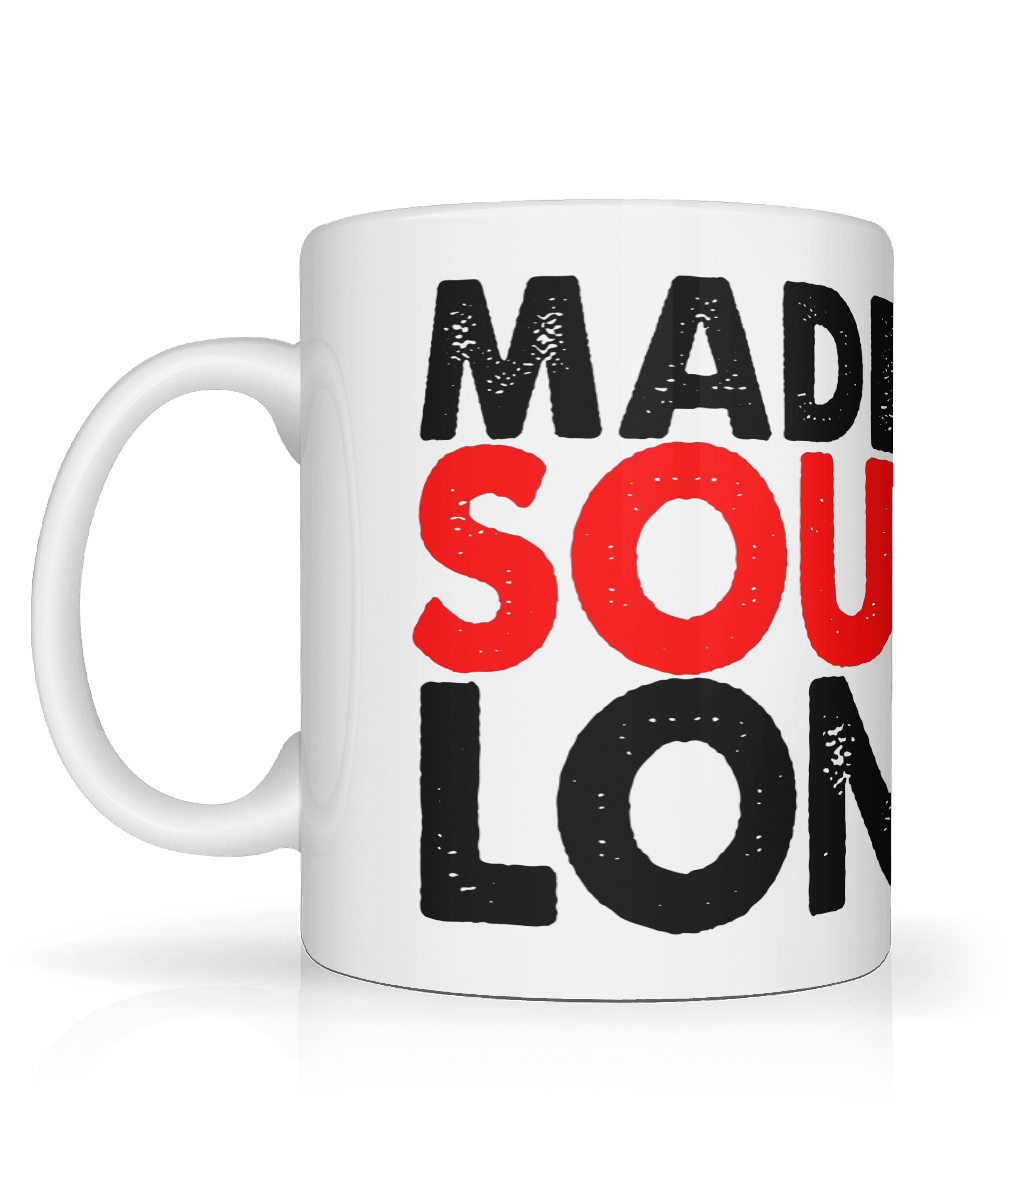 Made in South London Mug